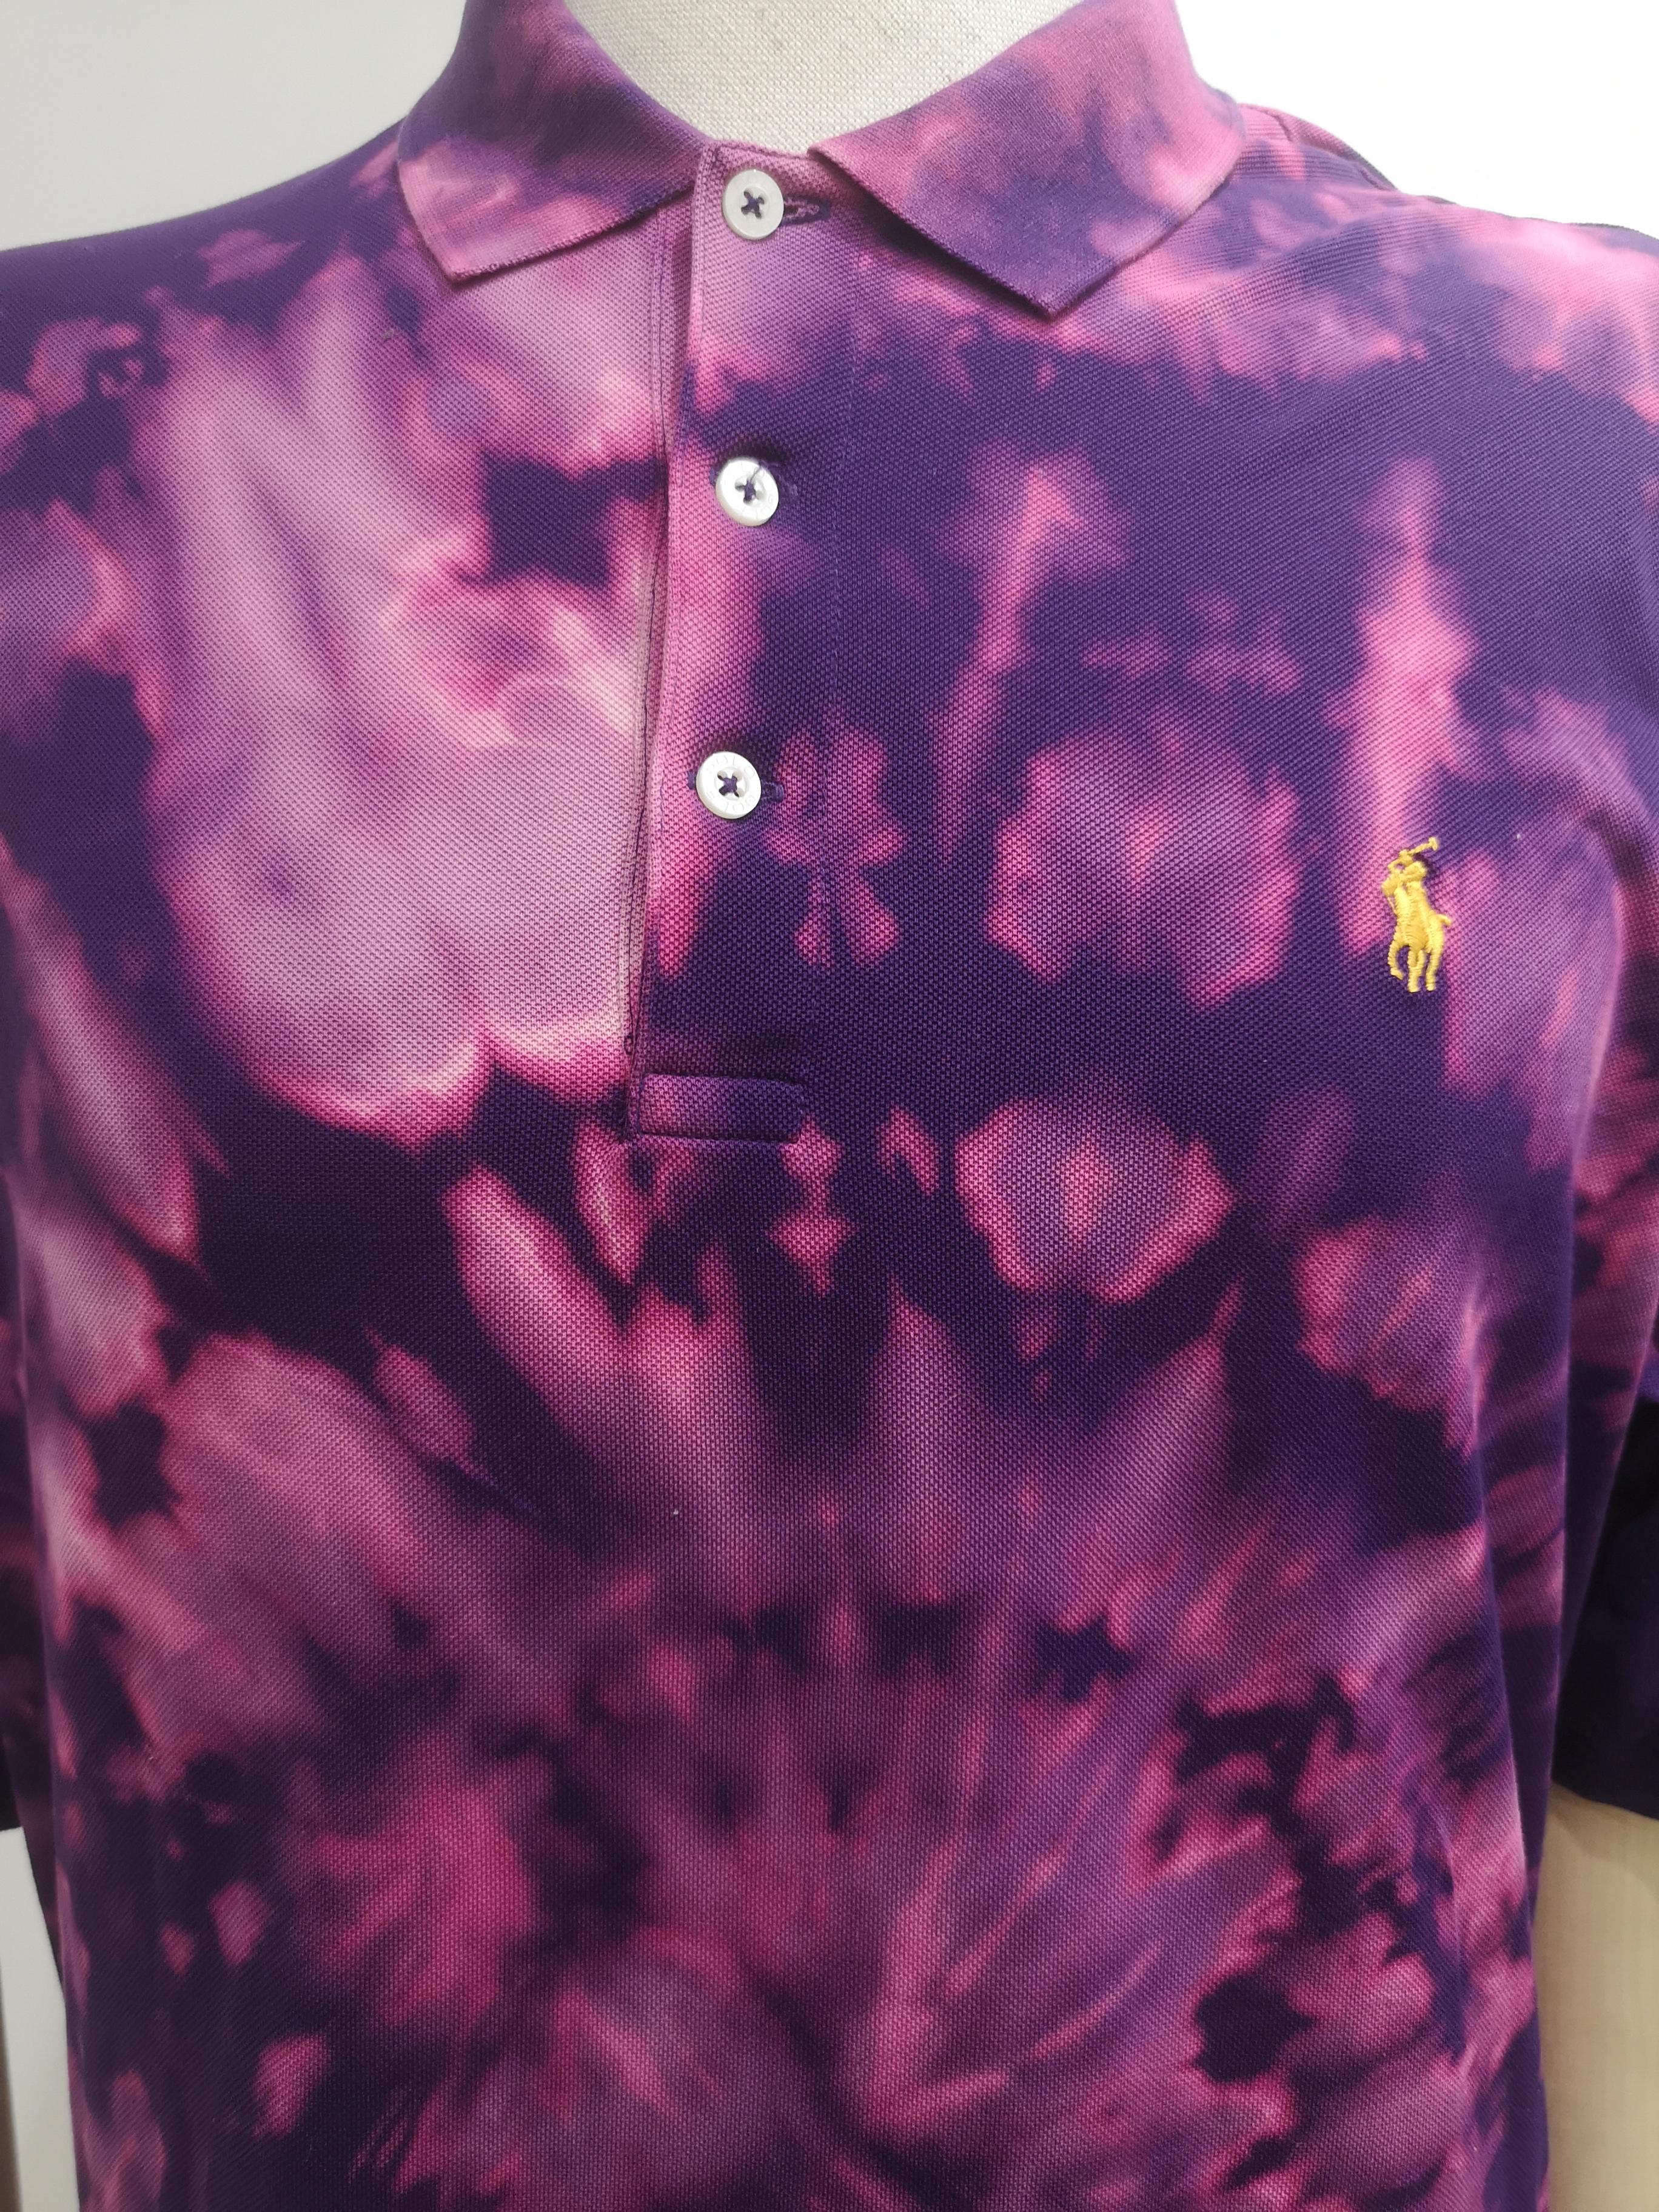 Purple cotton t-shirt
Oversized